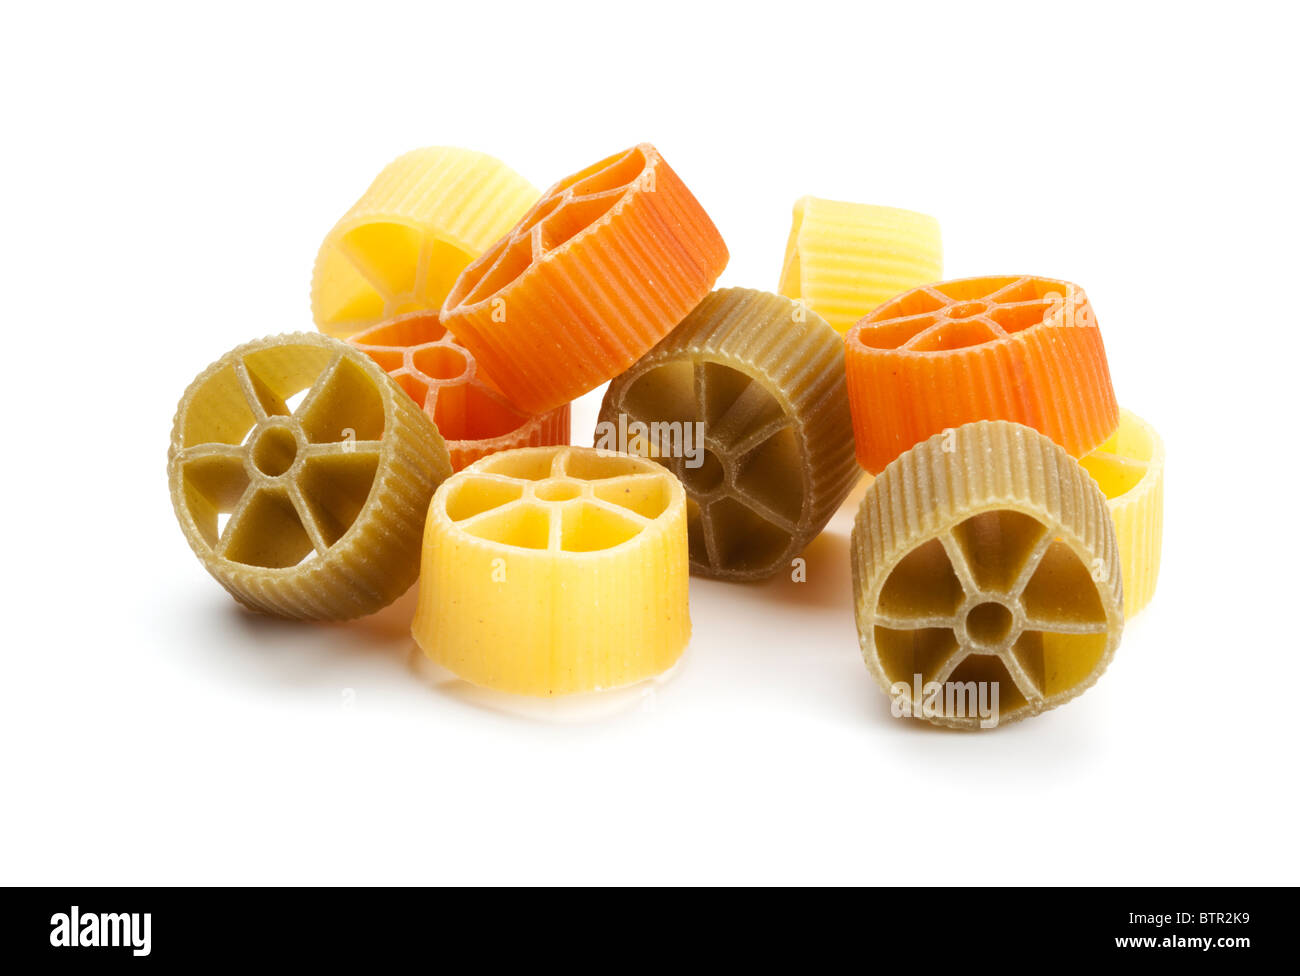 heap of ruote tricolori pasta wheels on white background Stock Photo